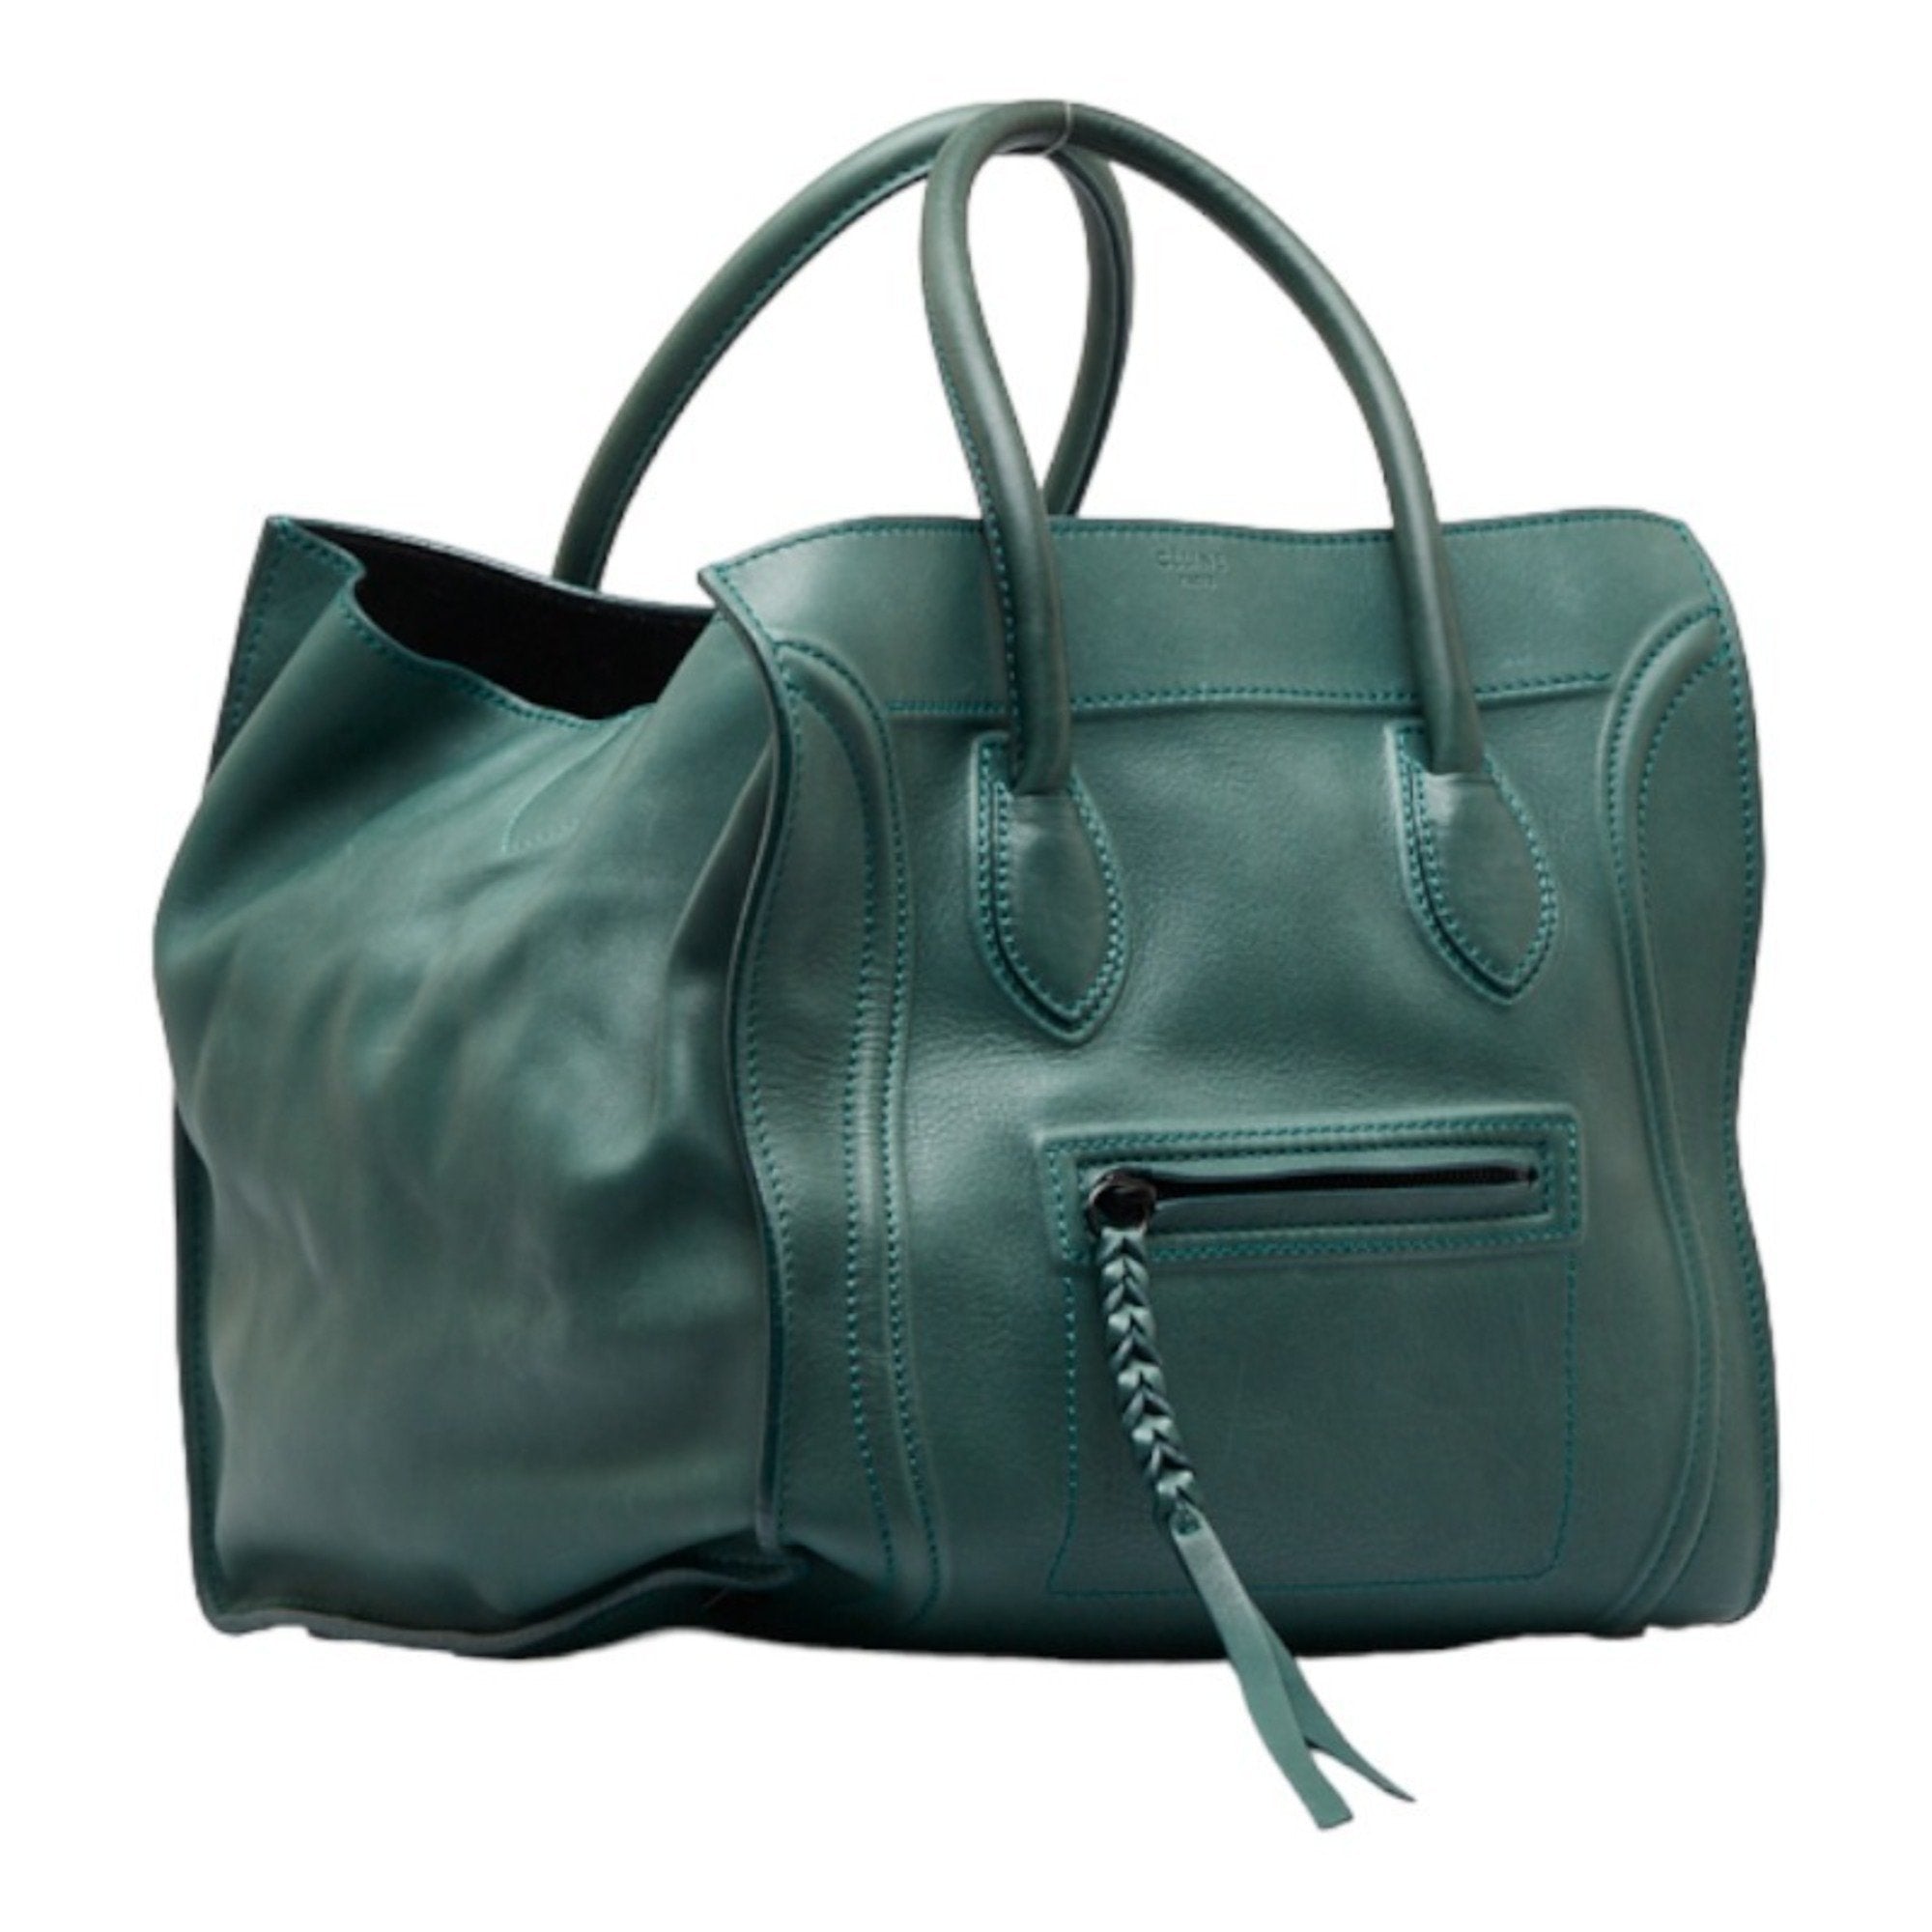 Red Celine Phantom Handbag | Celine bags, Suede leather, Leather top